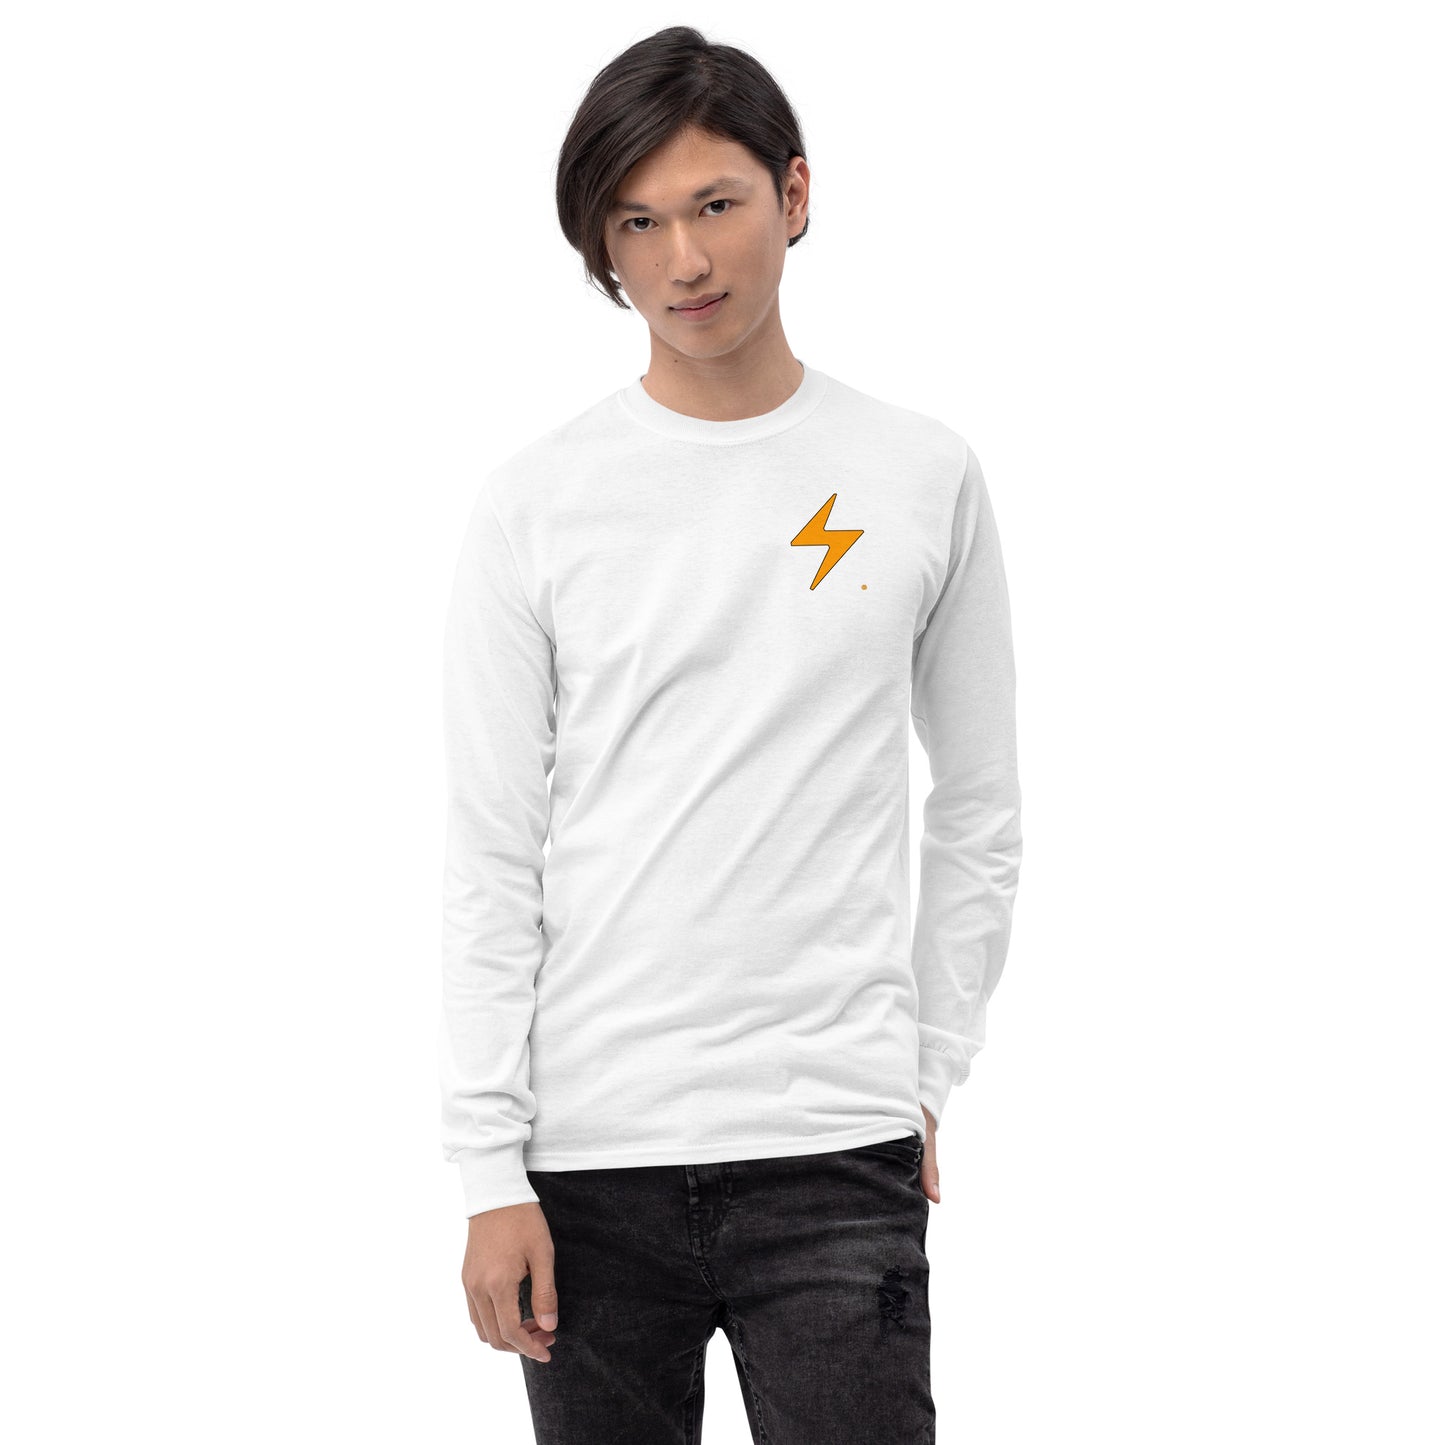 Unisex Long Sleeve Shirt "Lightning_sm"